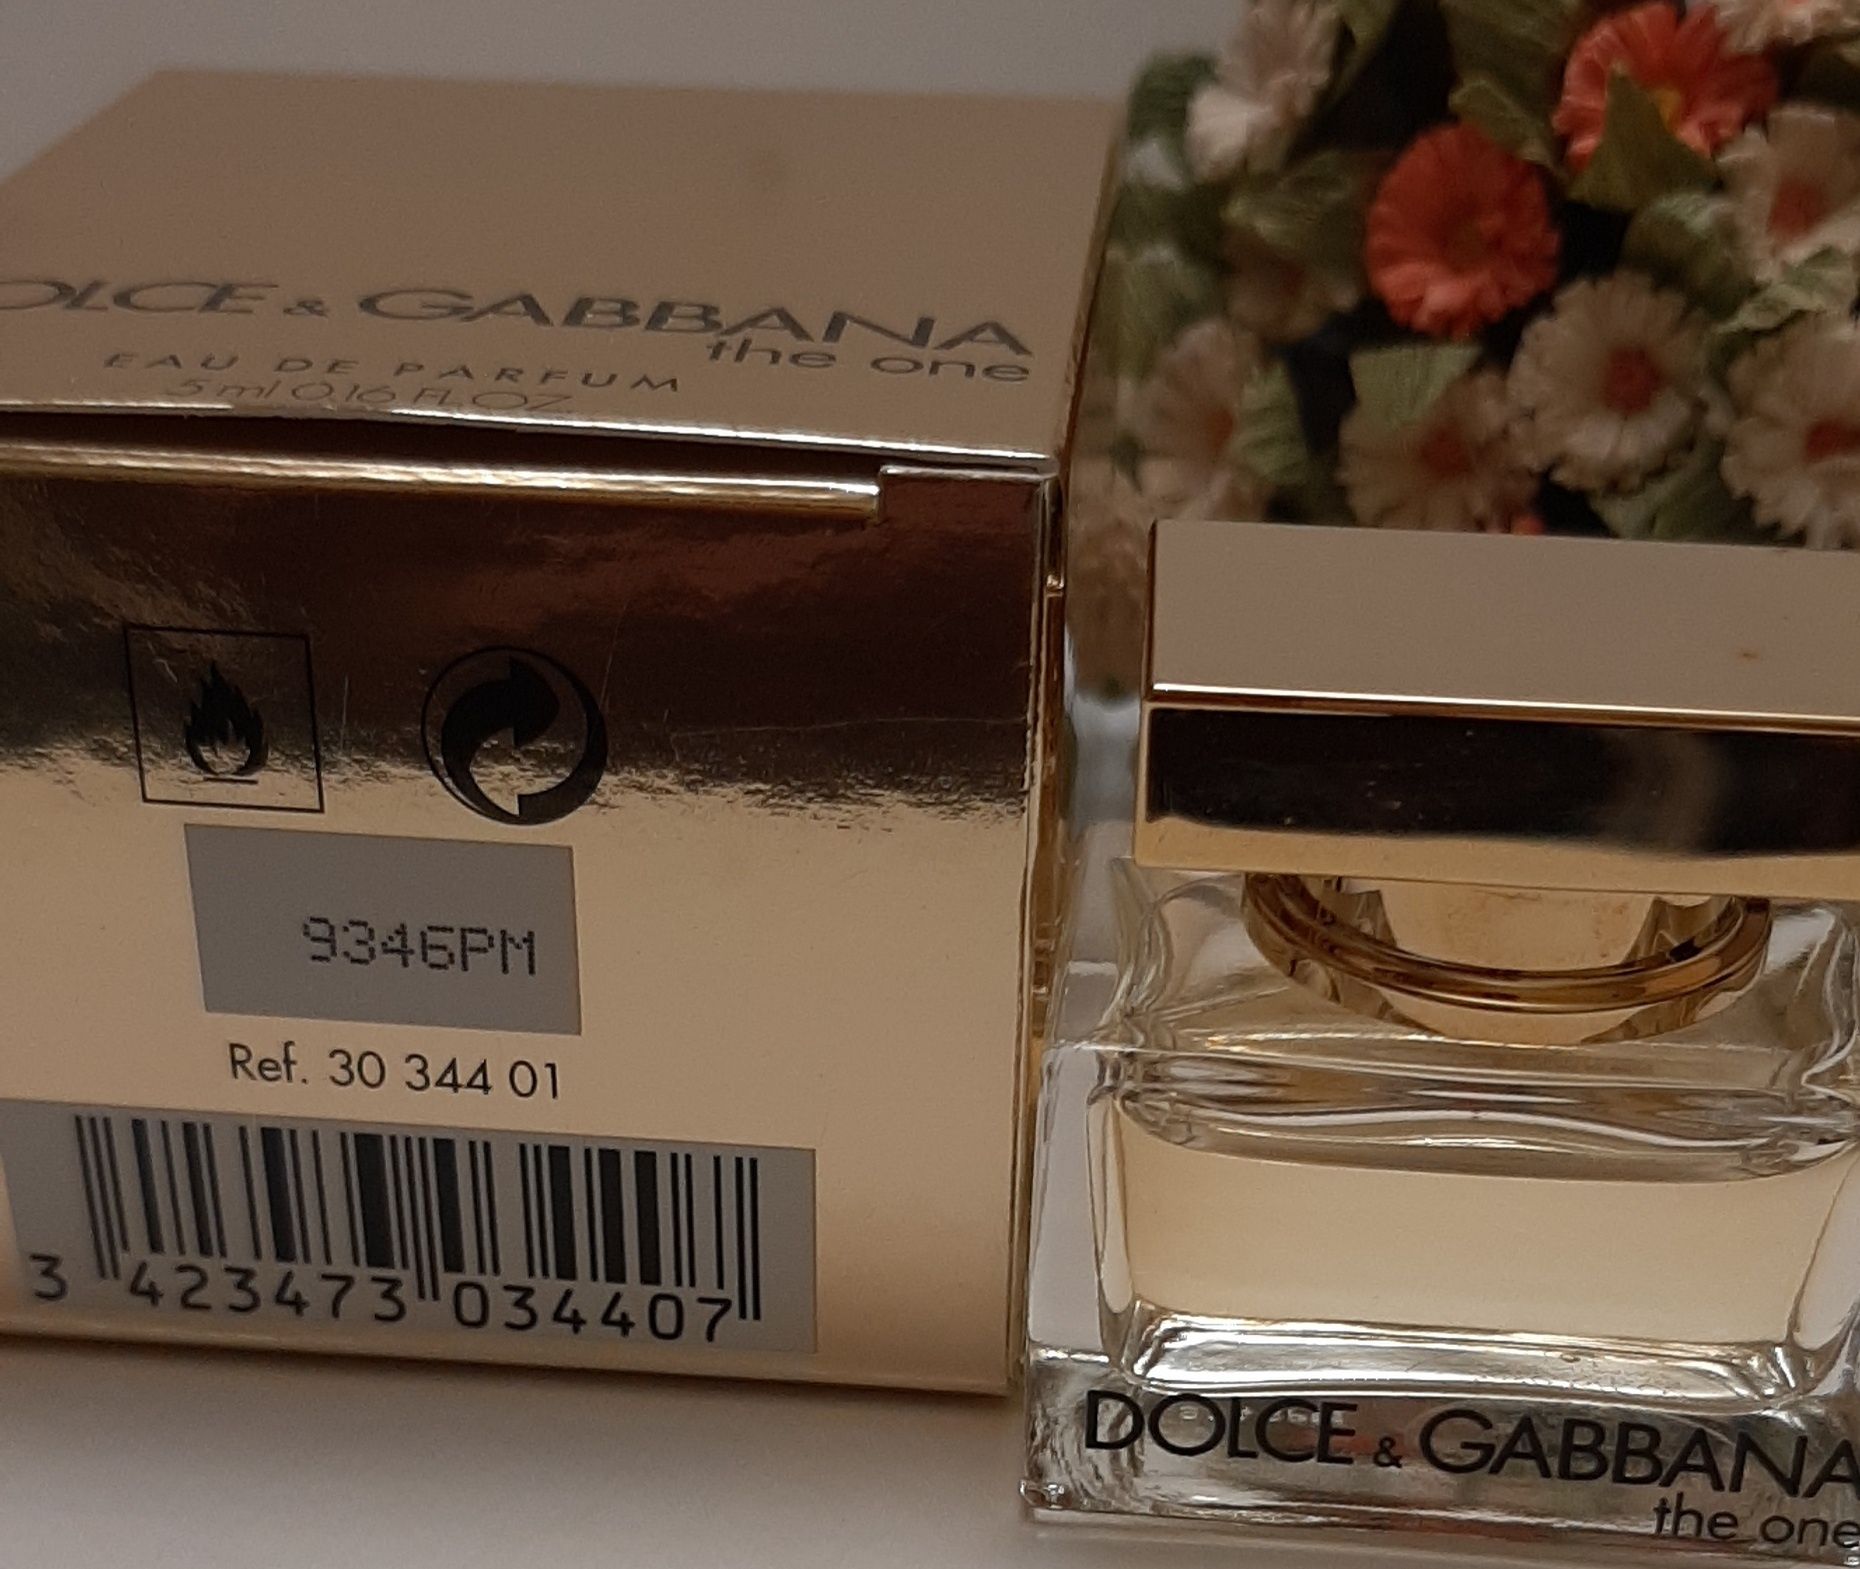 Dolce&Gabbana The One edp 5 ml, miniatura